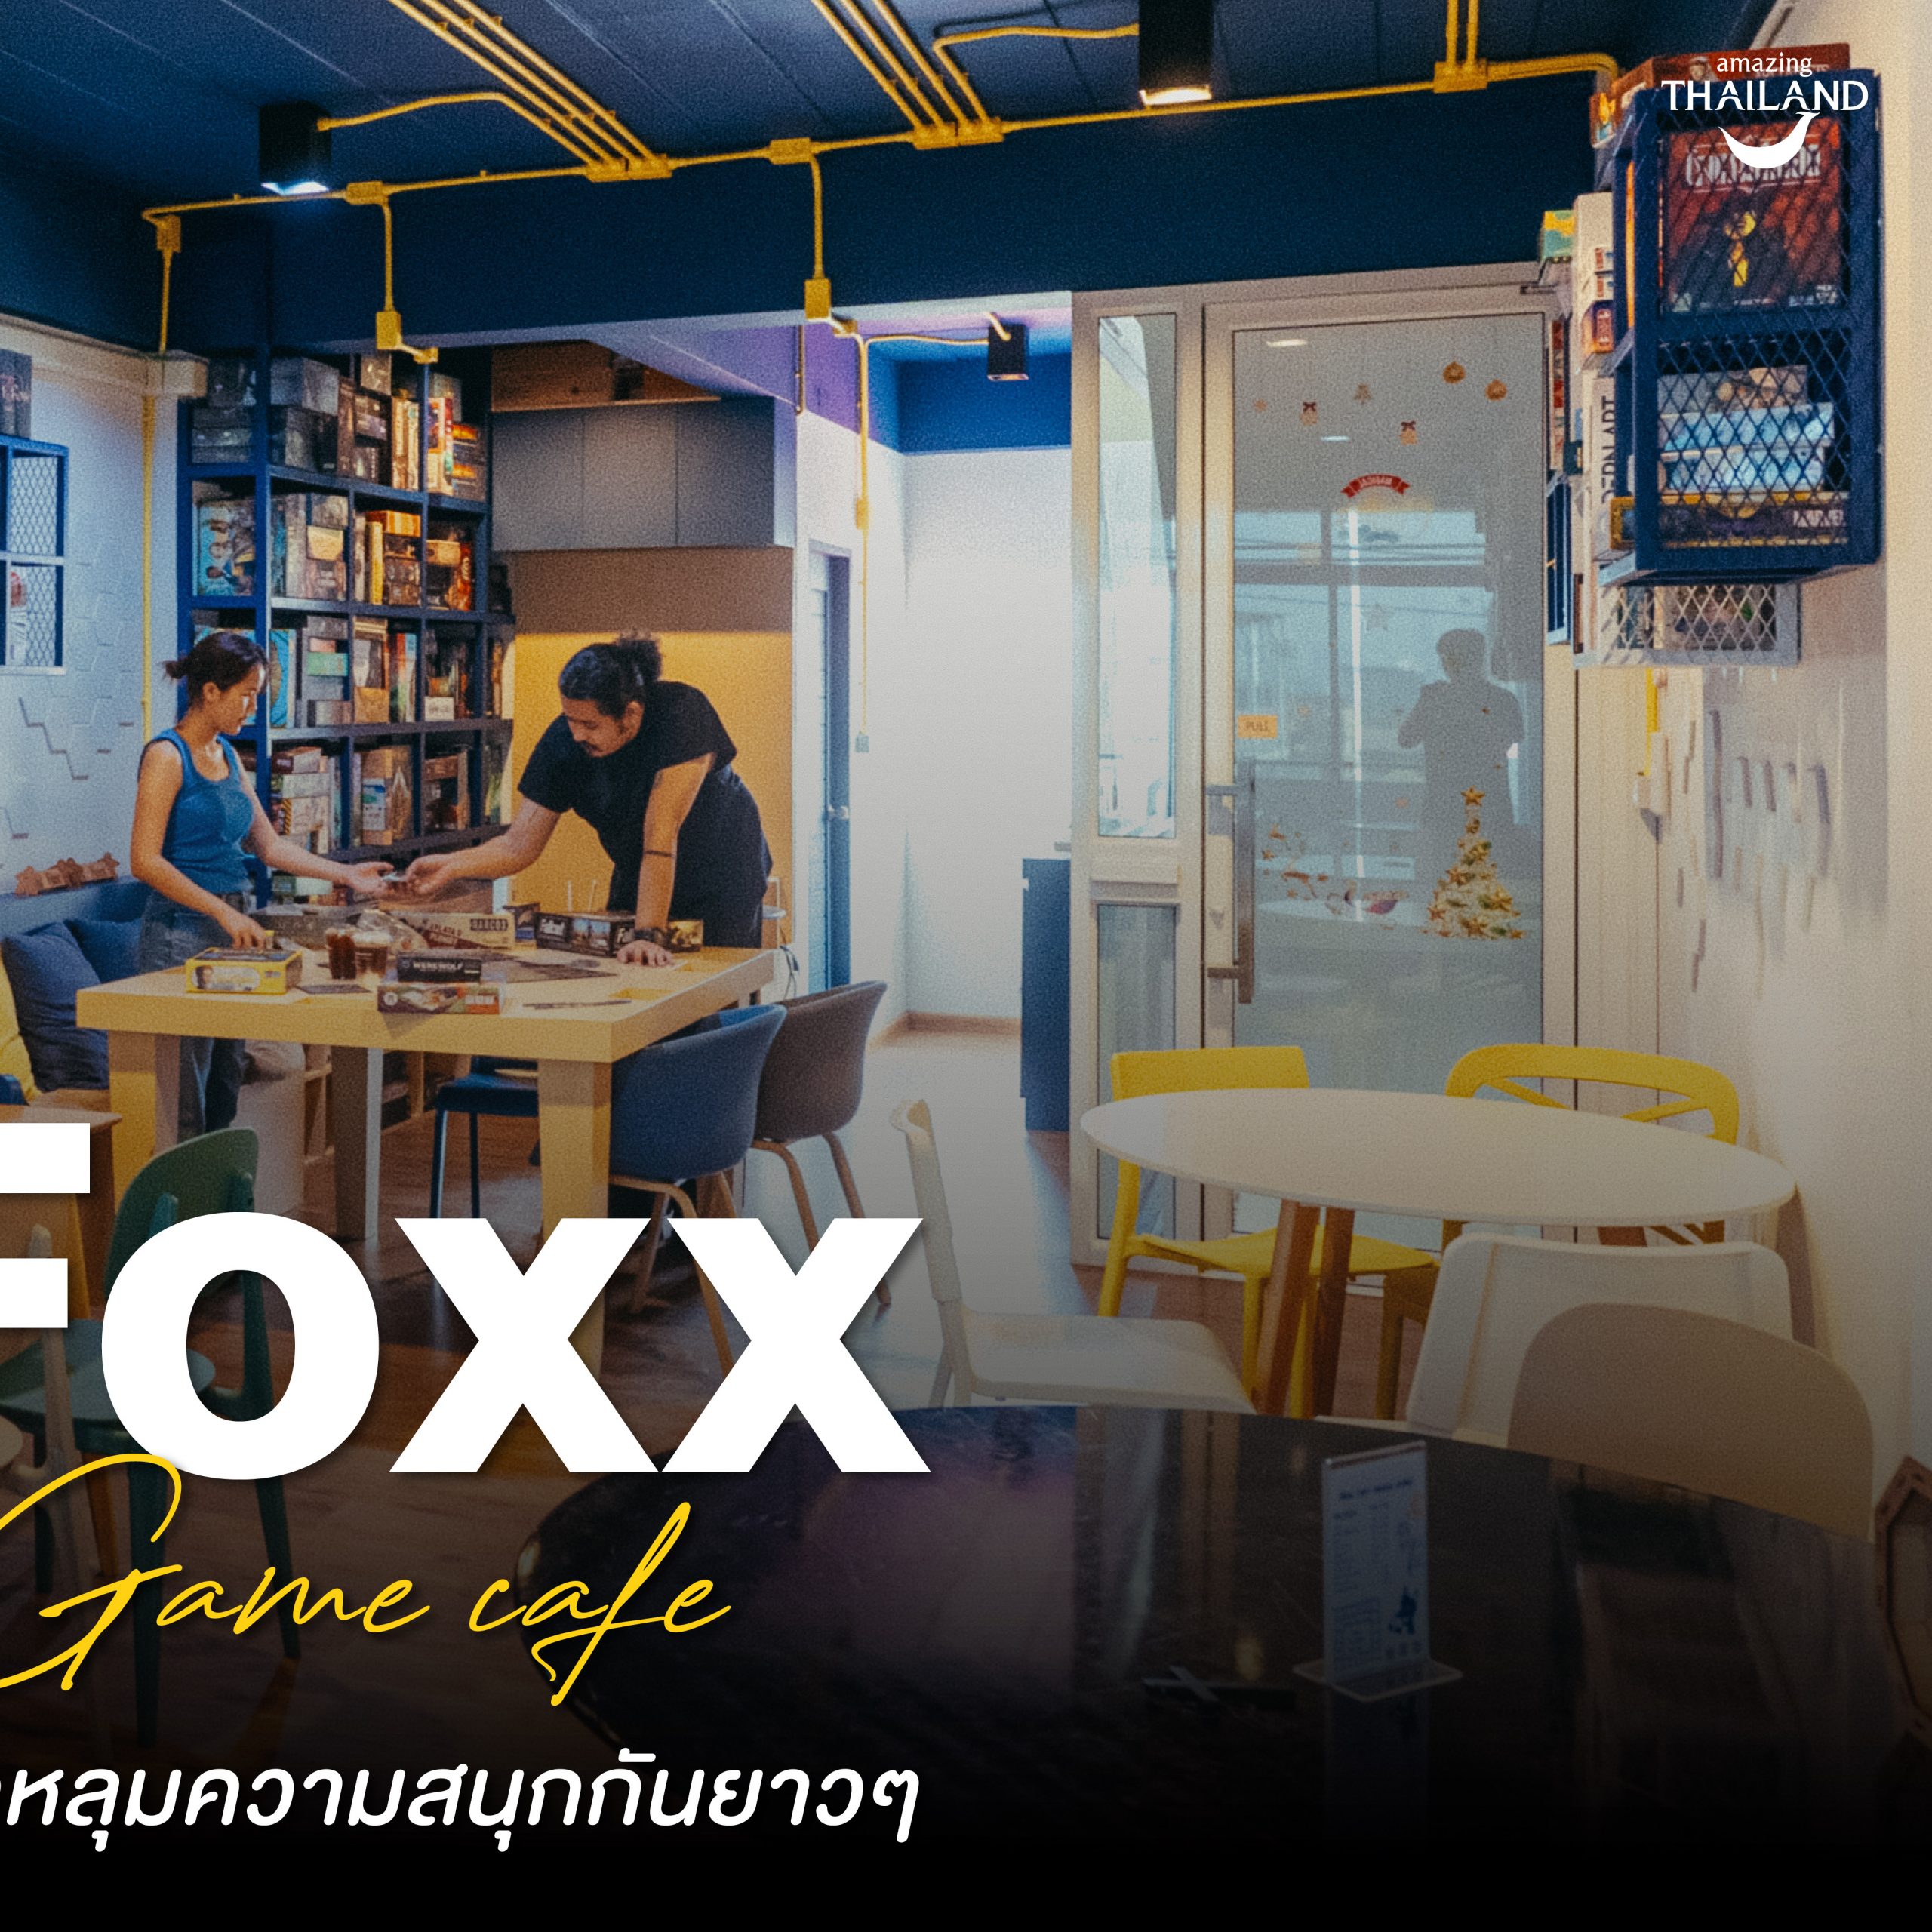 Chon Journey | Mr.Foxx Cafe บอร์ดเกมคาเฟ่ที่ระวังตกหลุมความสนุกกันยาวๆ